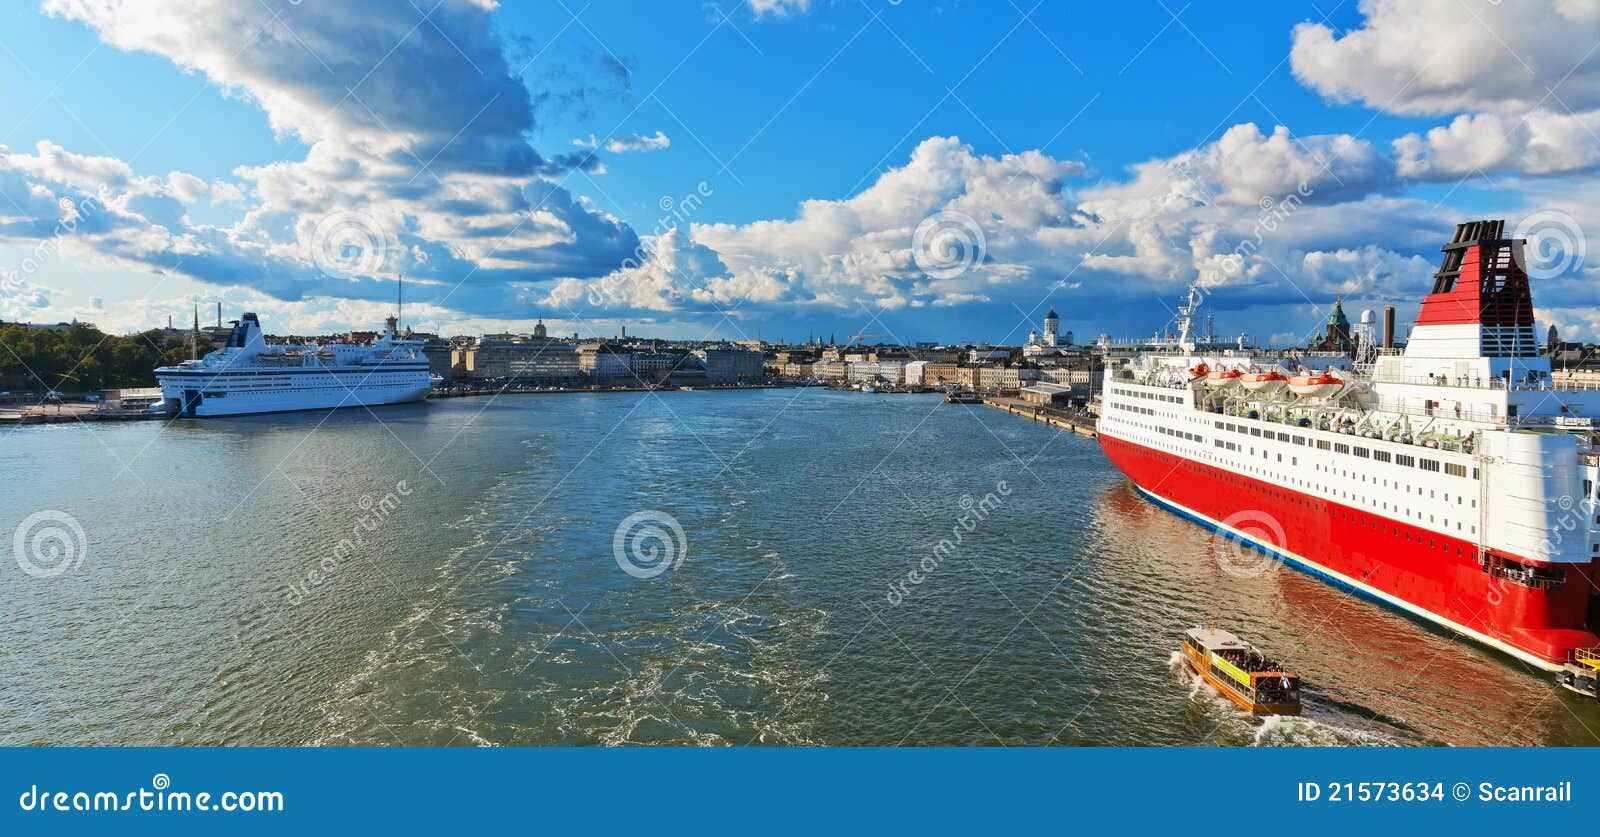 Scenic panorama of Helsinki, Finland